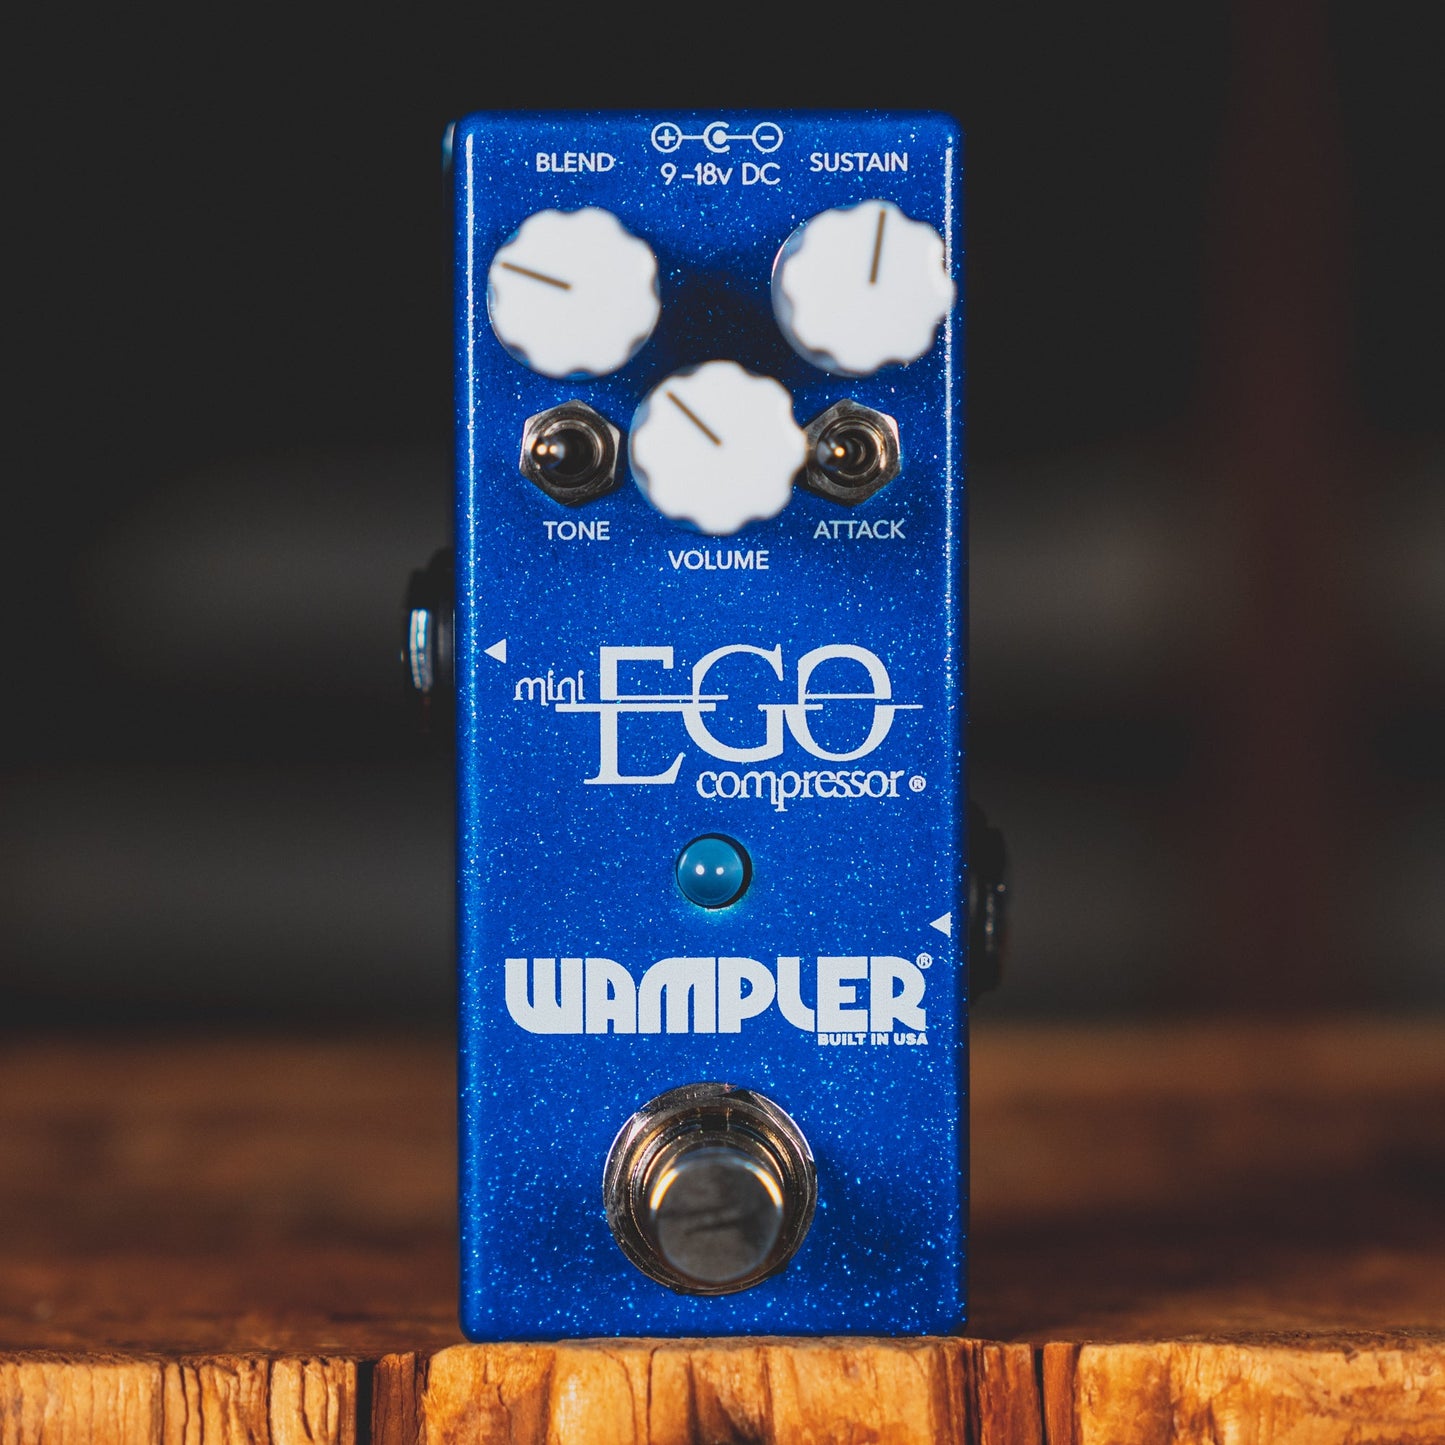 Wampler Mini Ego Compressor Effect Pedal - Used